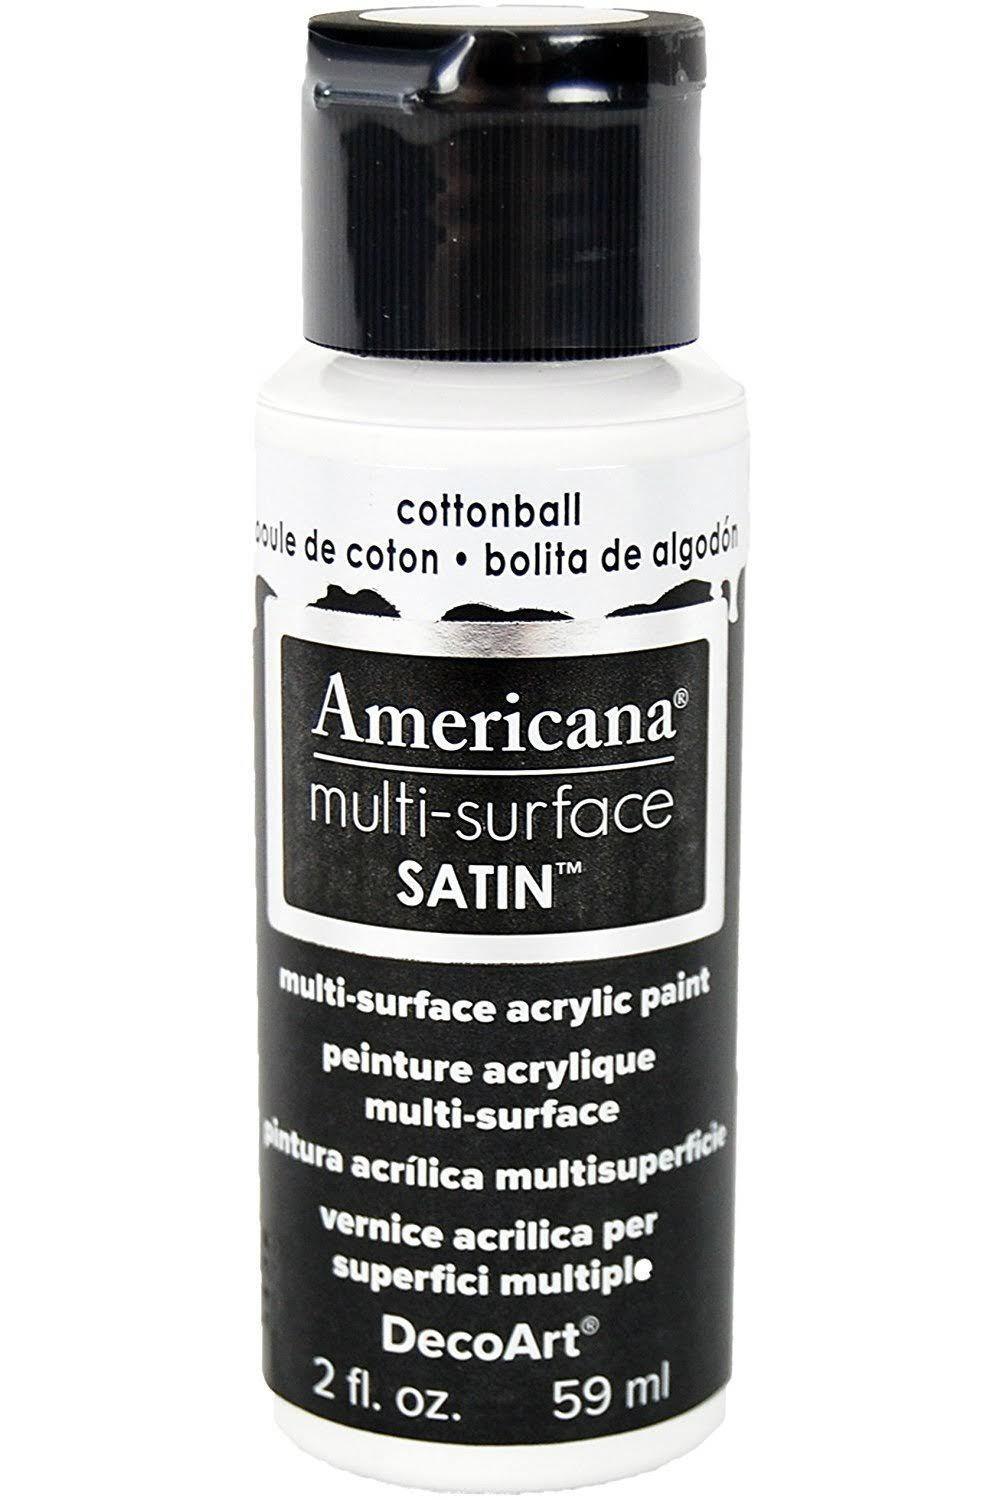 Deco Art Americana Multi-Surface Satin - Cotton Ball, 59ml